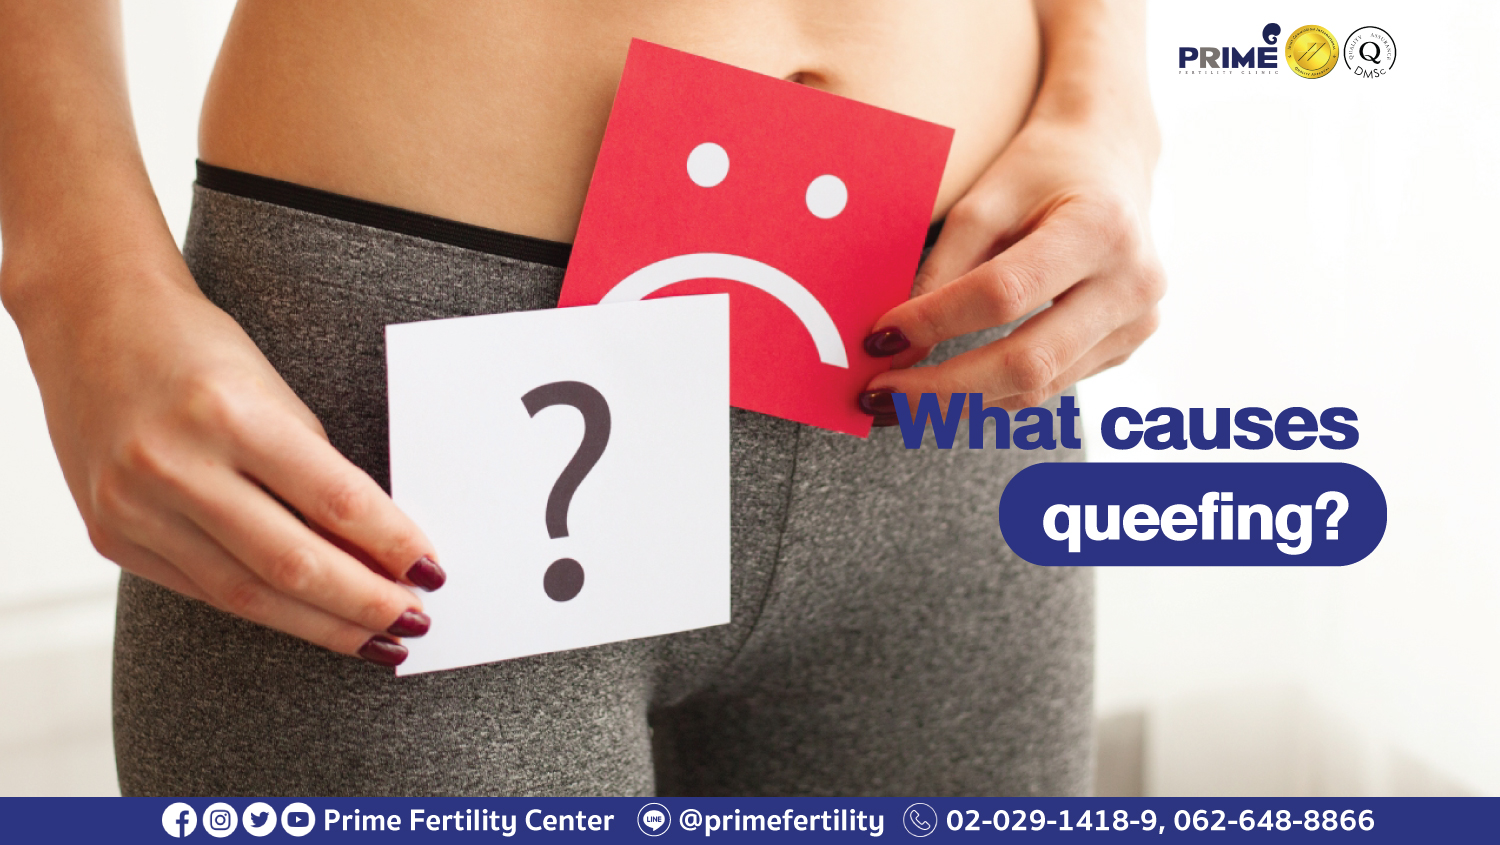 What causes queefing? Prime Fertility Clinic